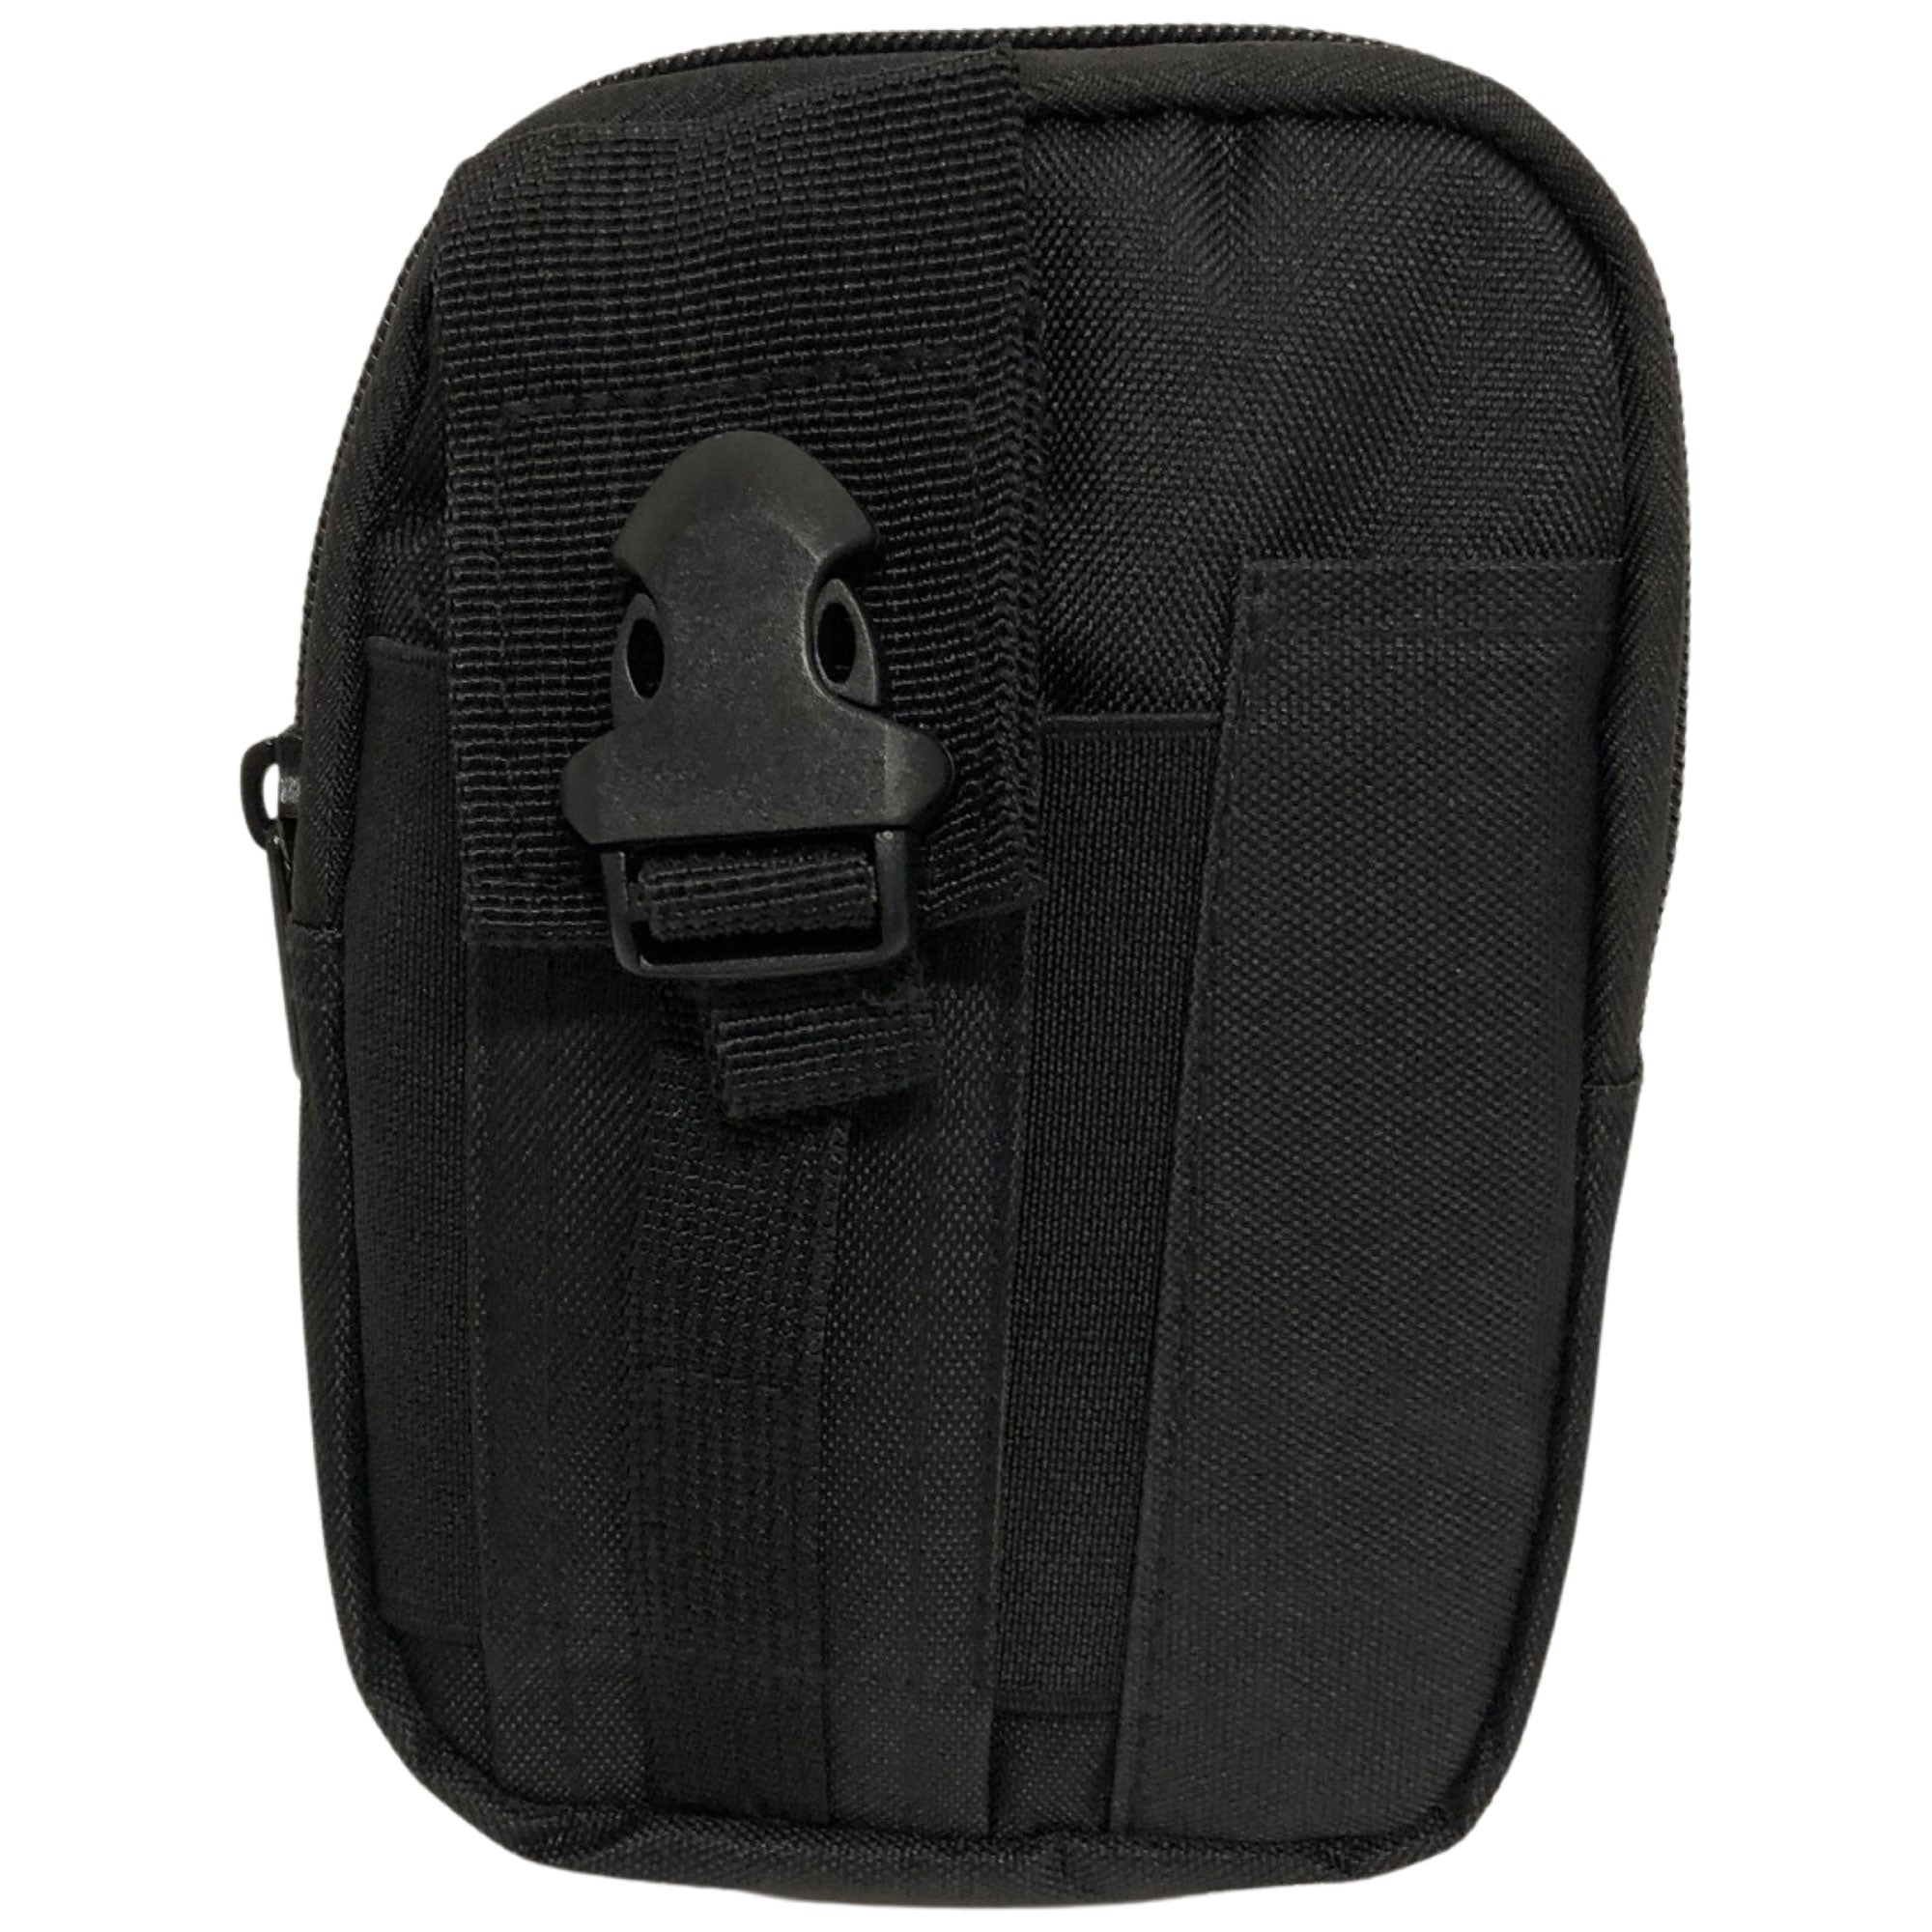 CLEARANCE BELT BAGS (CASE OF 60 - $1.25 / PIECE) - Bulk Wholesale Belt Bags in Black SKU: 1302-BLACK-60